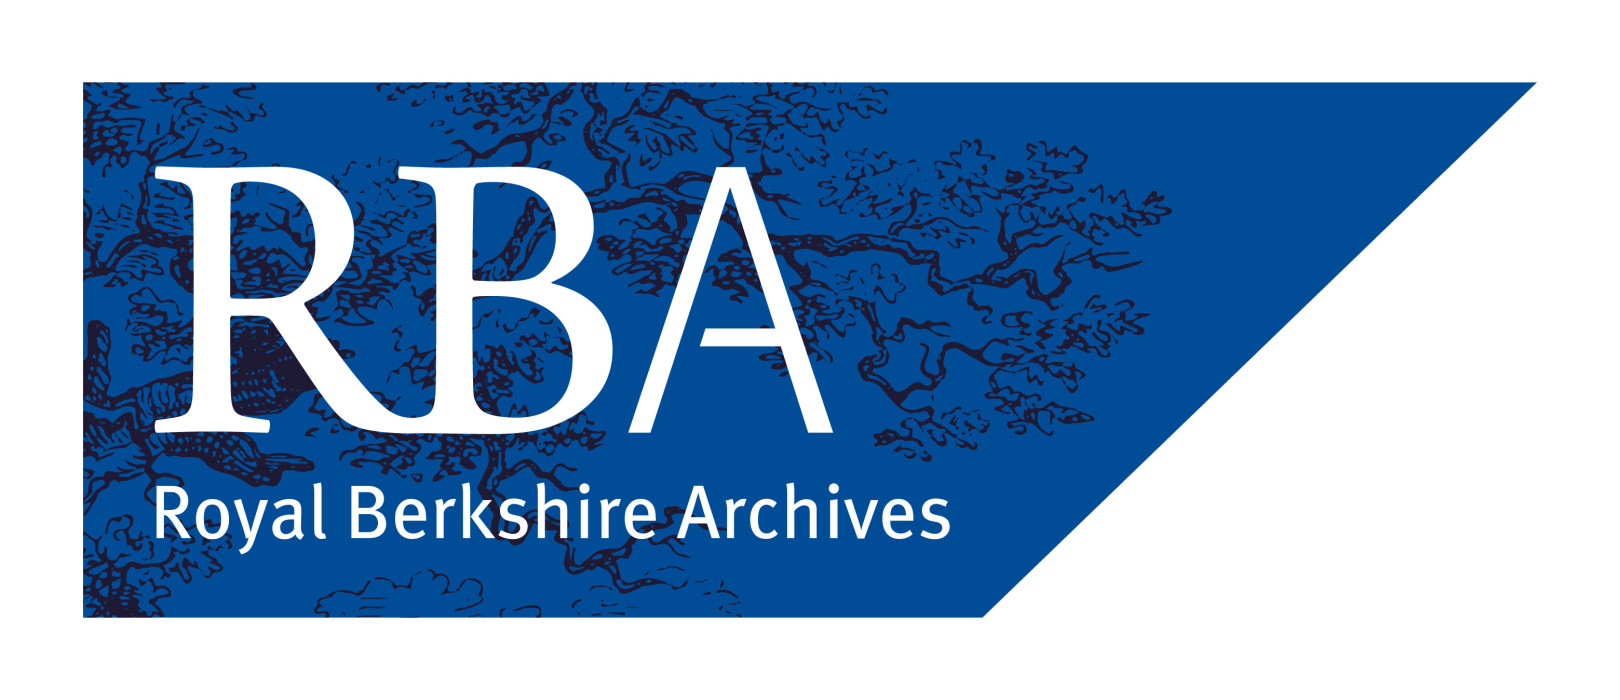 Royal Berkshire Archives logo